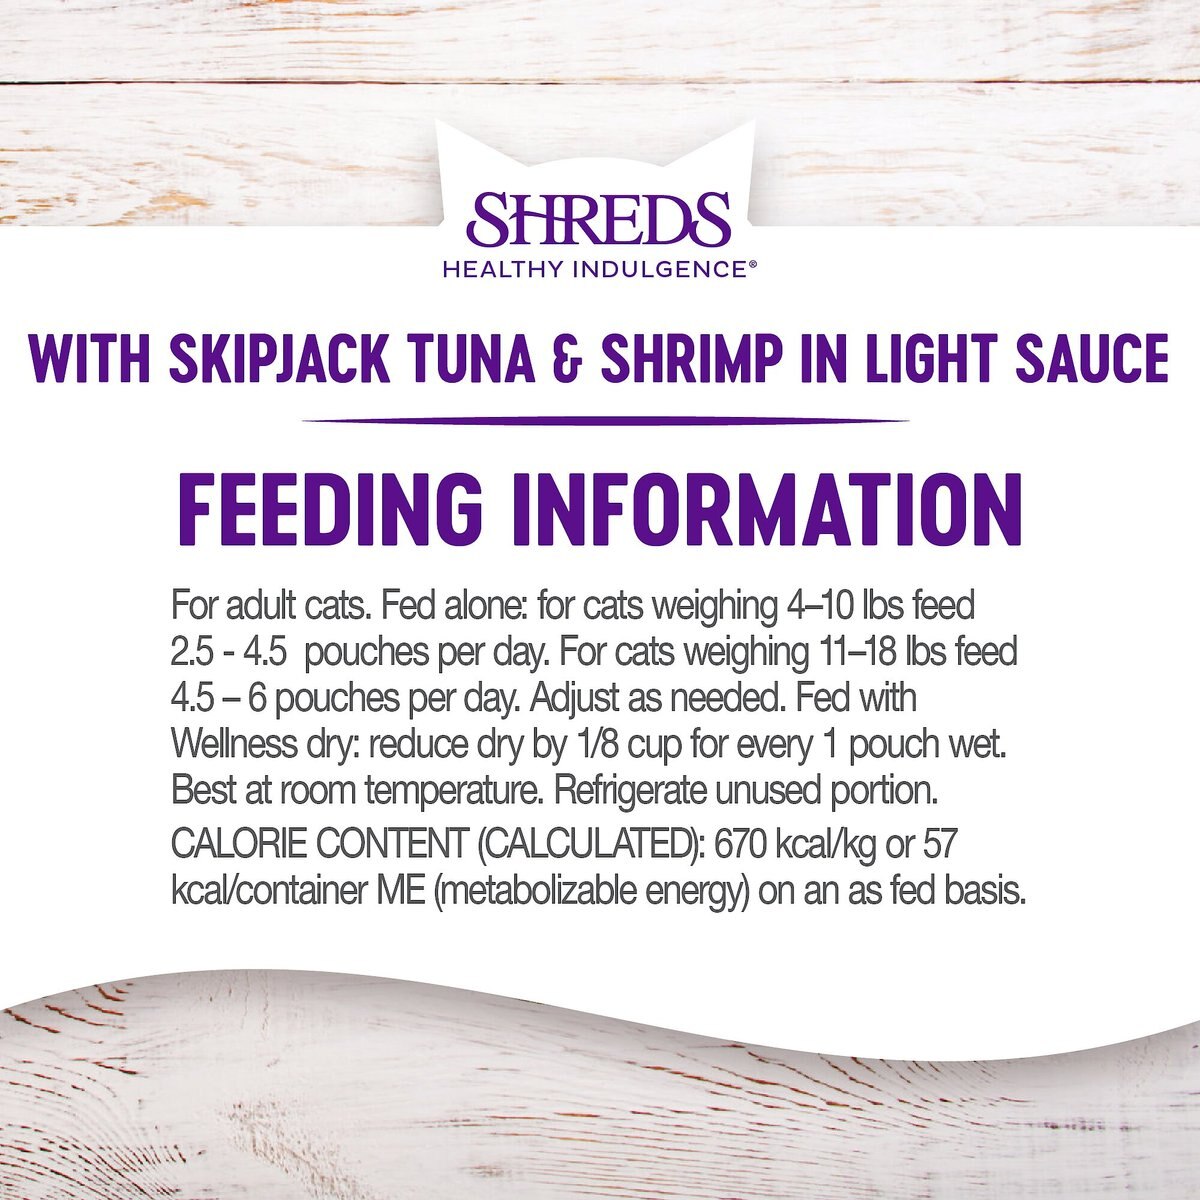 Wellness Healthy Indulgence Shreds Tuna & Shrimp in Light Sauce Wet Cat Food  Canned Cat Food  | PetMax Canada